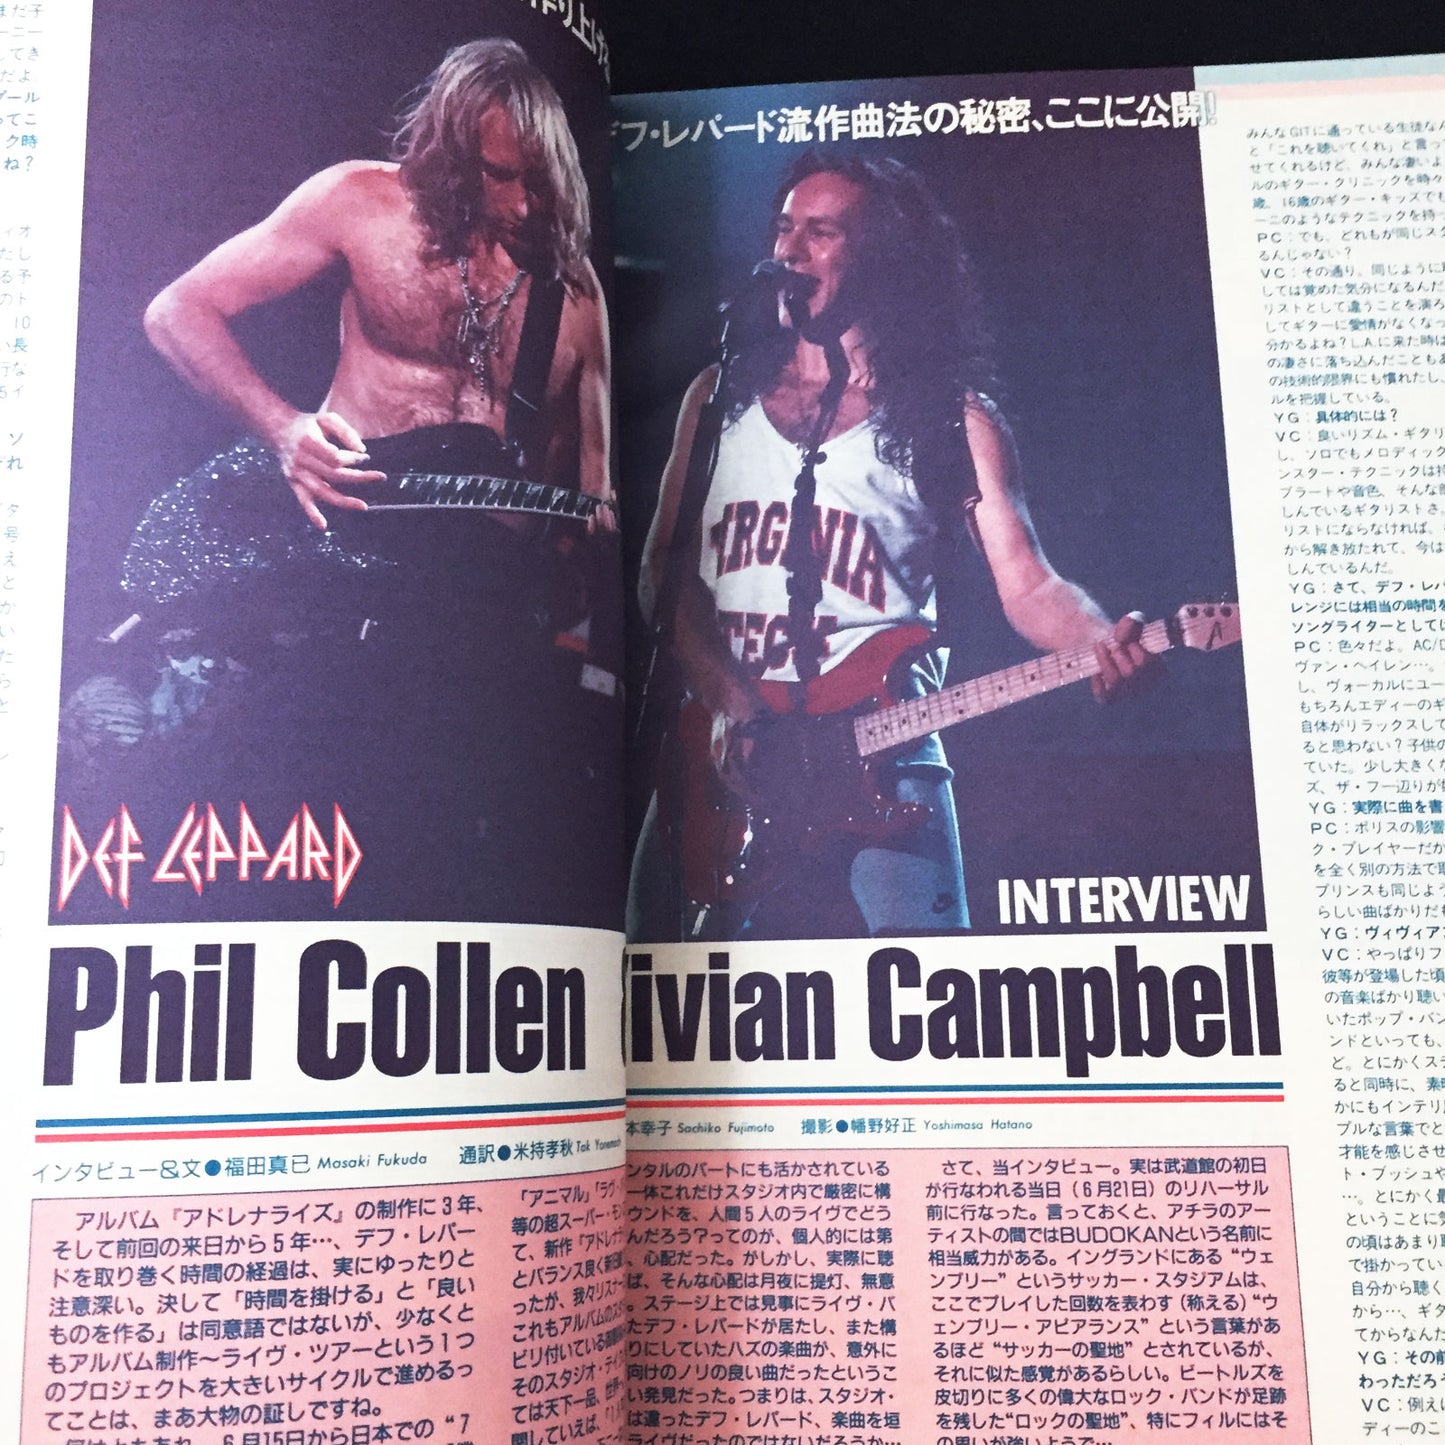 Young Guitar Magazine October 1993